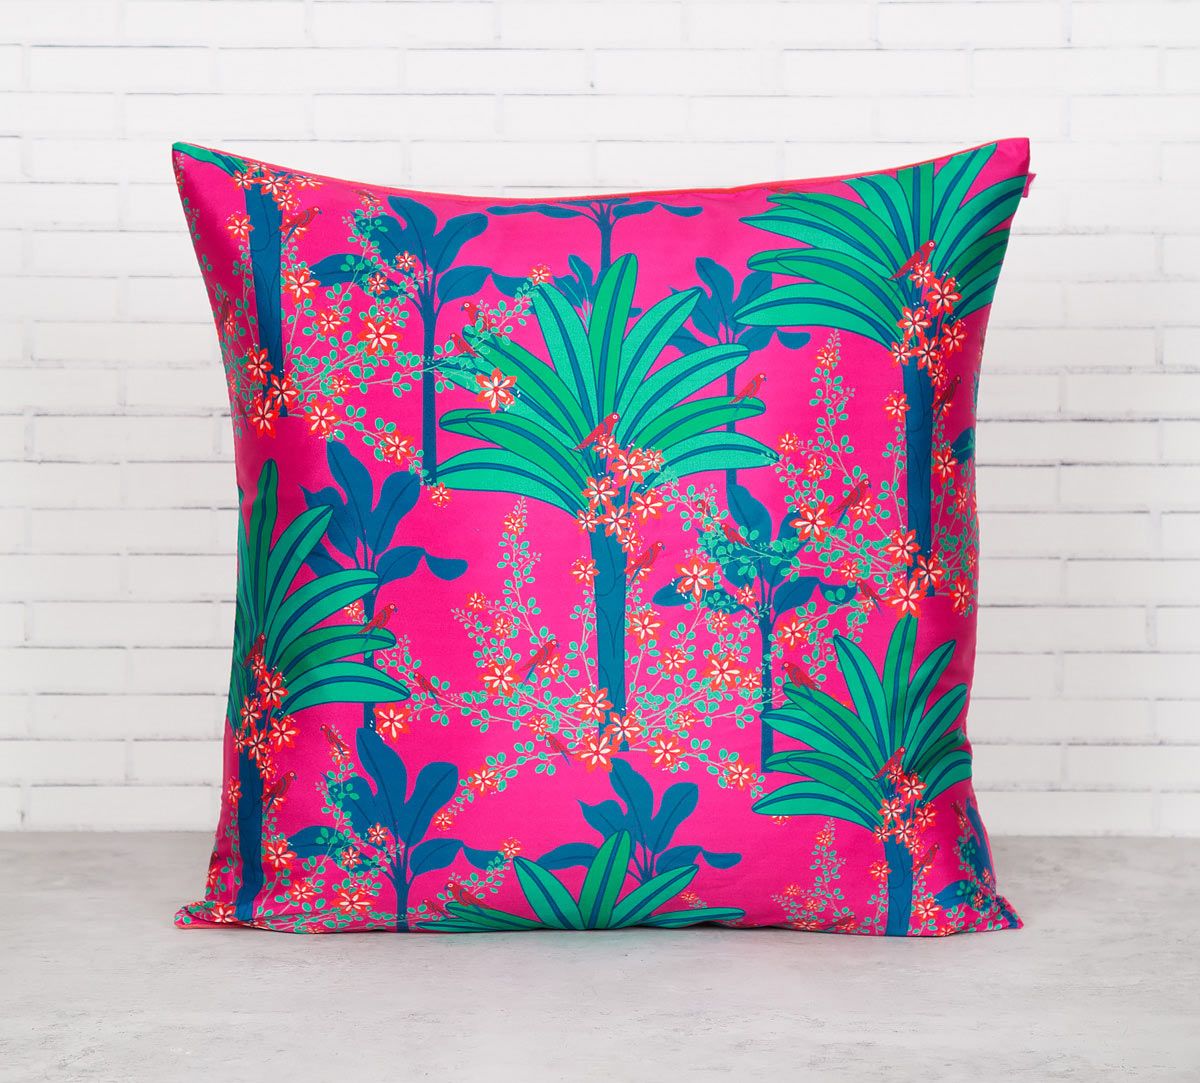 India Circus Royal Palms Blended Taf Silk Cushion Cover